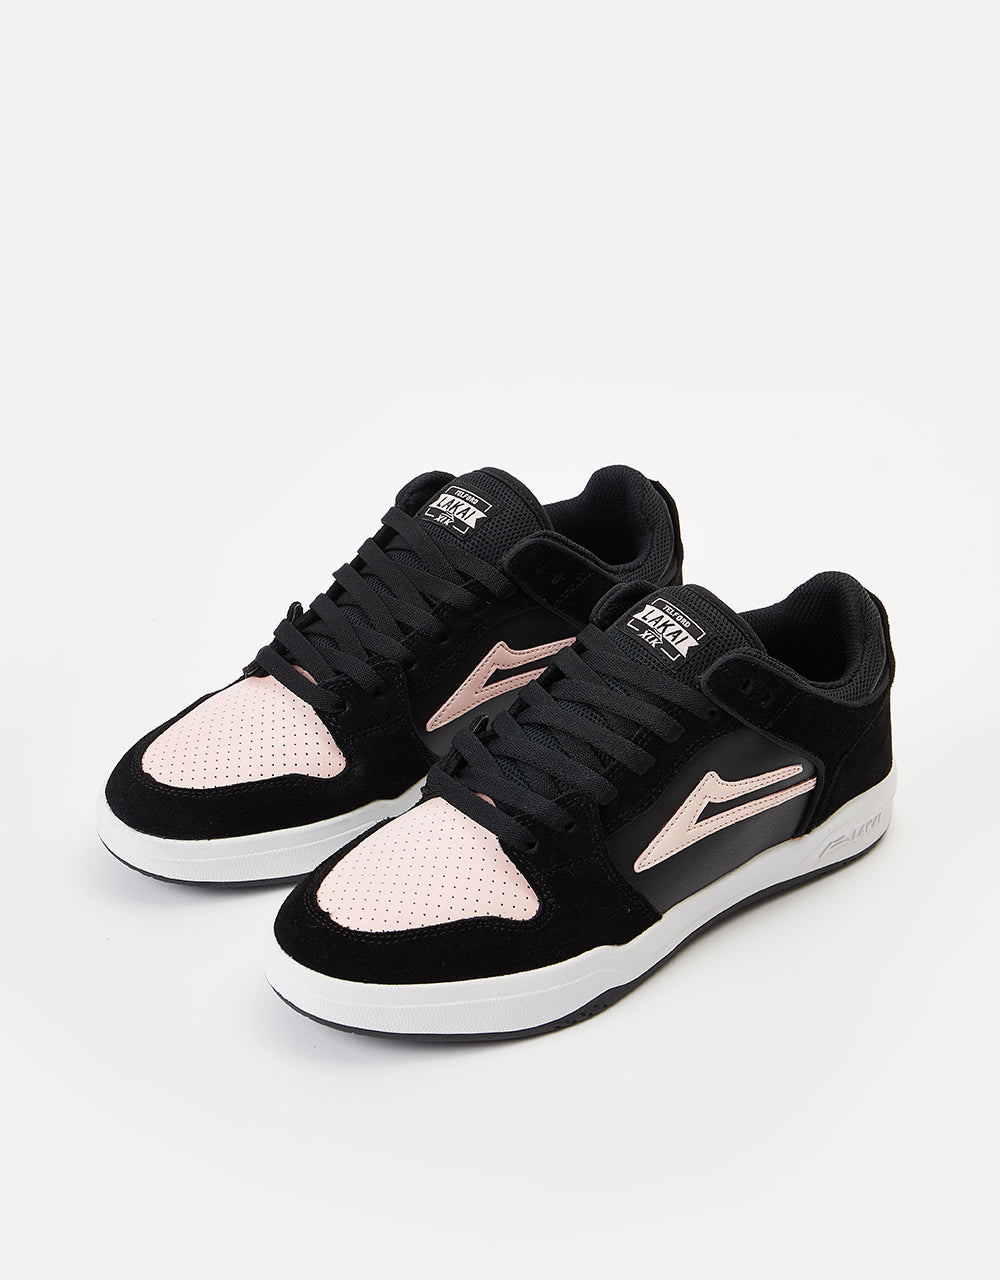 Lakai Telford Low Skate Shoes - Black/Pink Suede